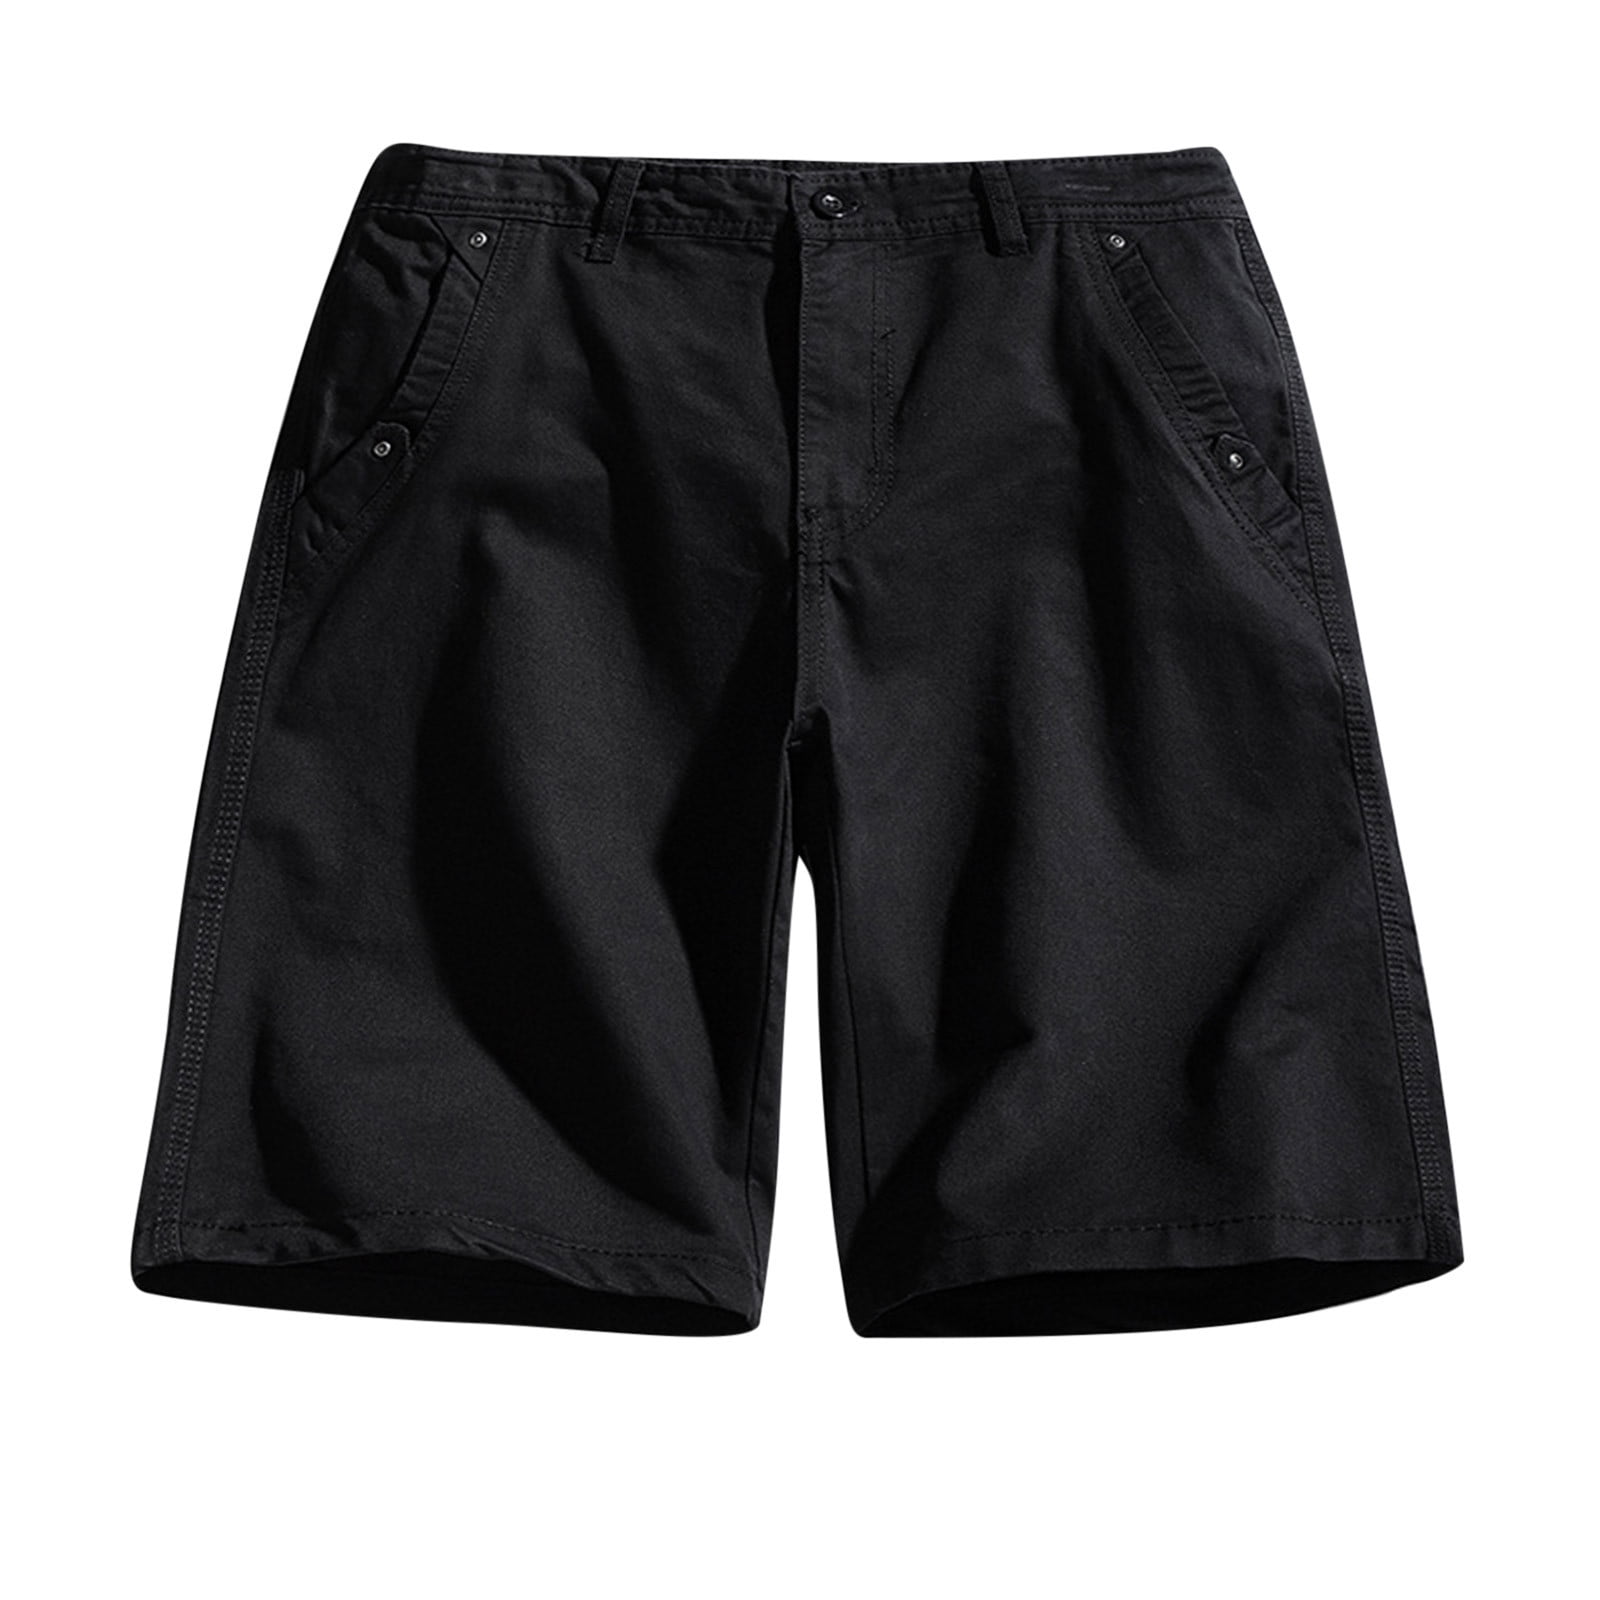 Hvyesh Cargo Shorts for Men Relaxed Fit Multi Pockets Shorts Work ...